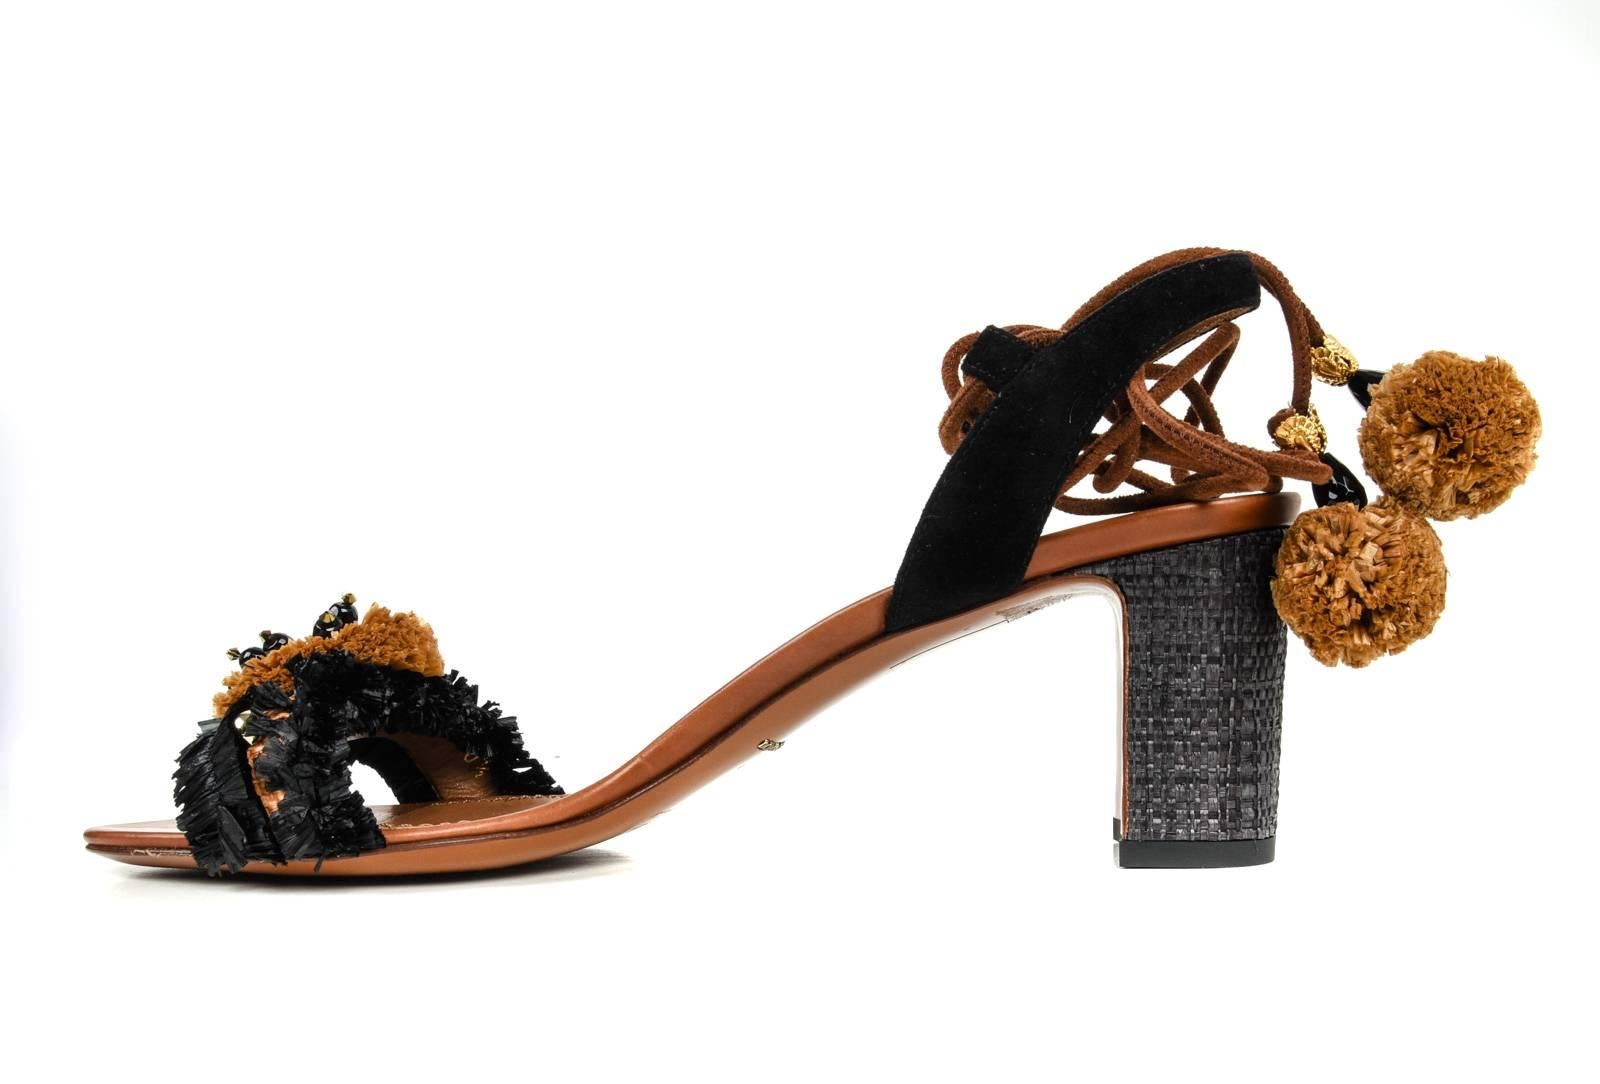 Dolce&Gabbana Shoe Rafia  Leather Ankle Tie Black  Camel 40.5 / 10.5 New  1